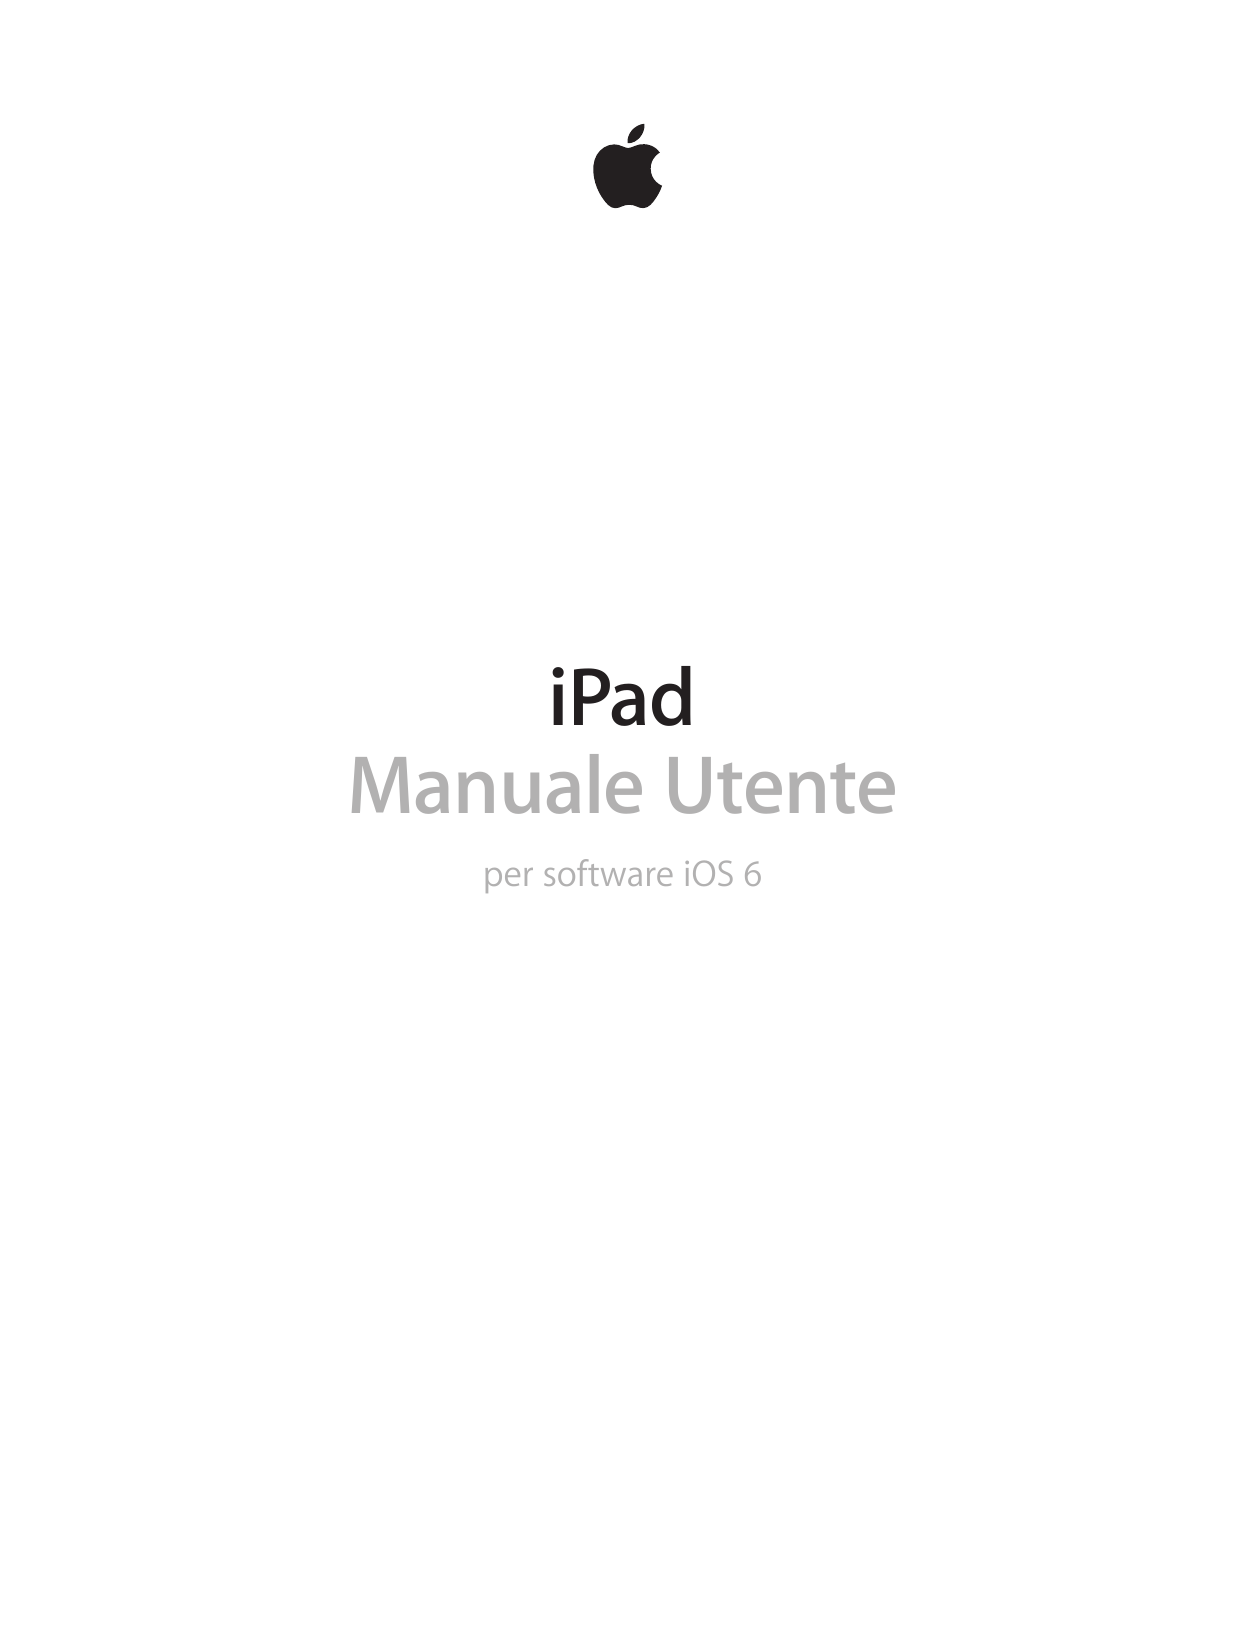 iPadManuale Utenteper software iOS 6